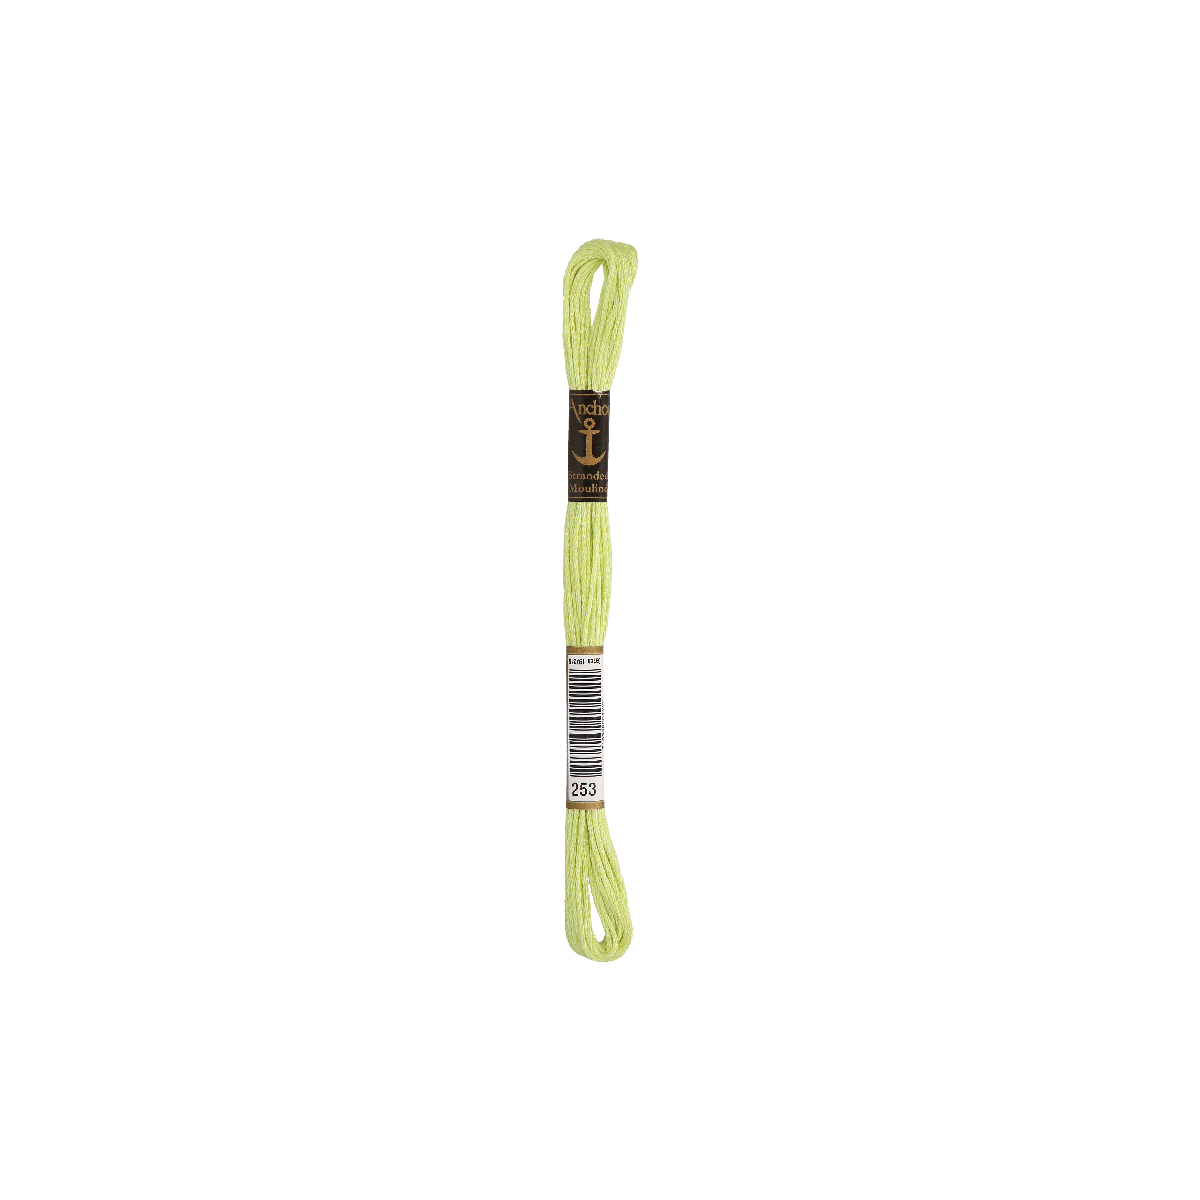 Anchor Sticktwist 8m, verde lime, cotone, colore 253, 6 fili